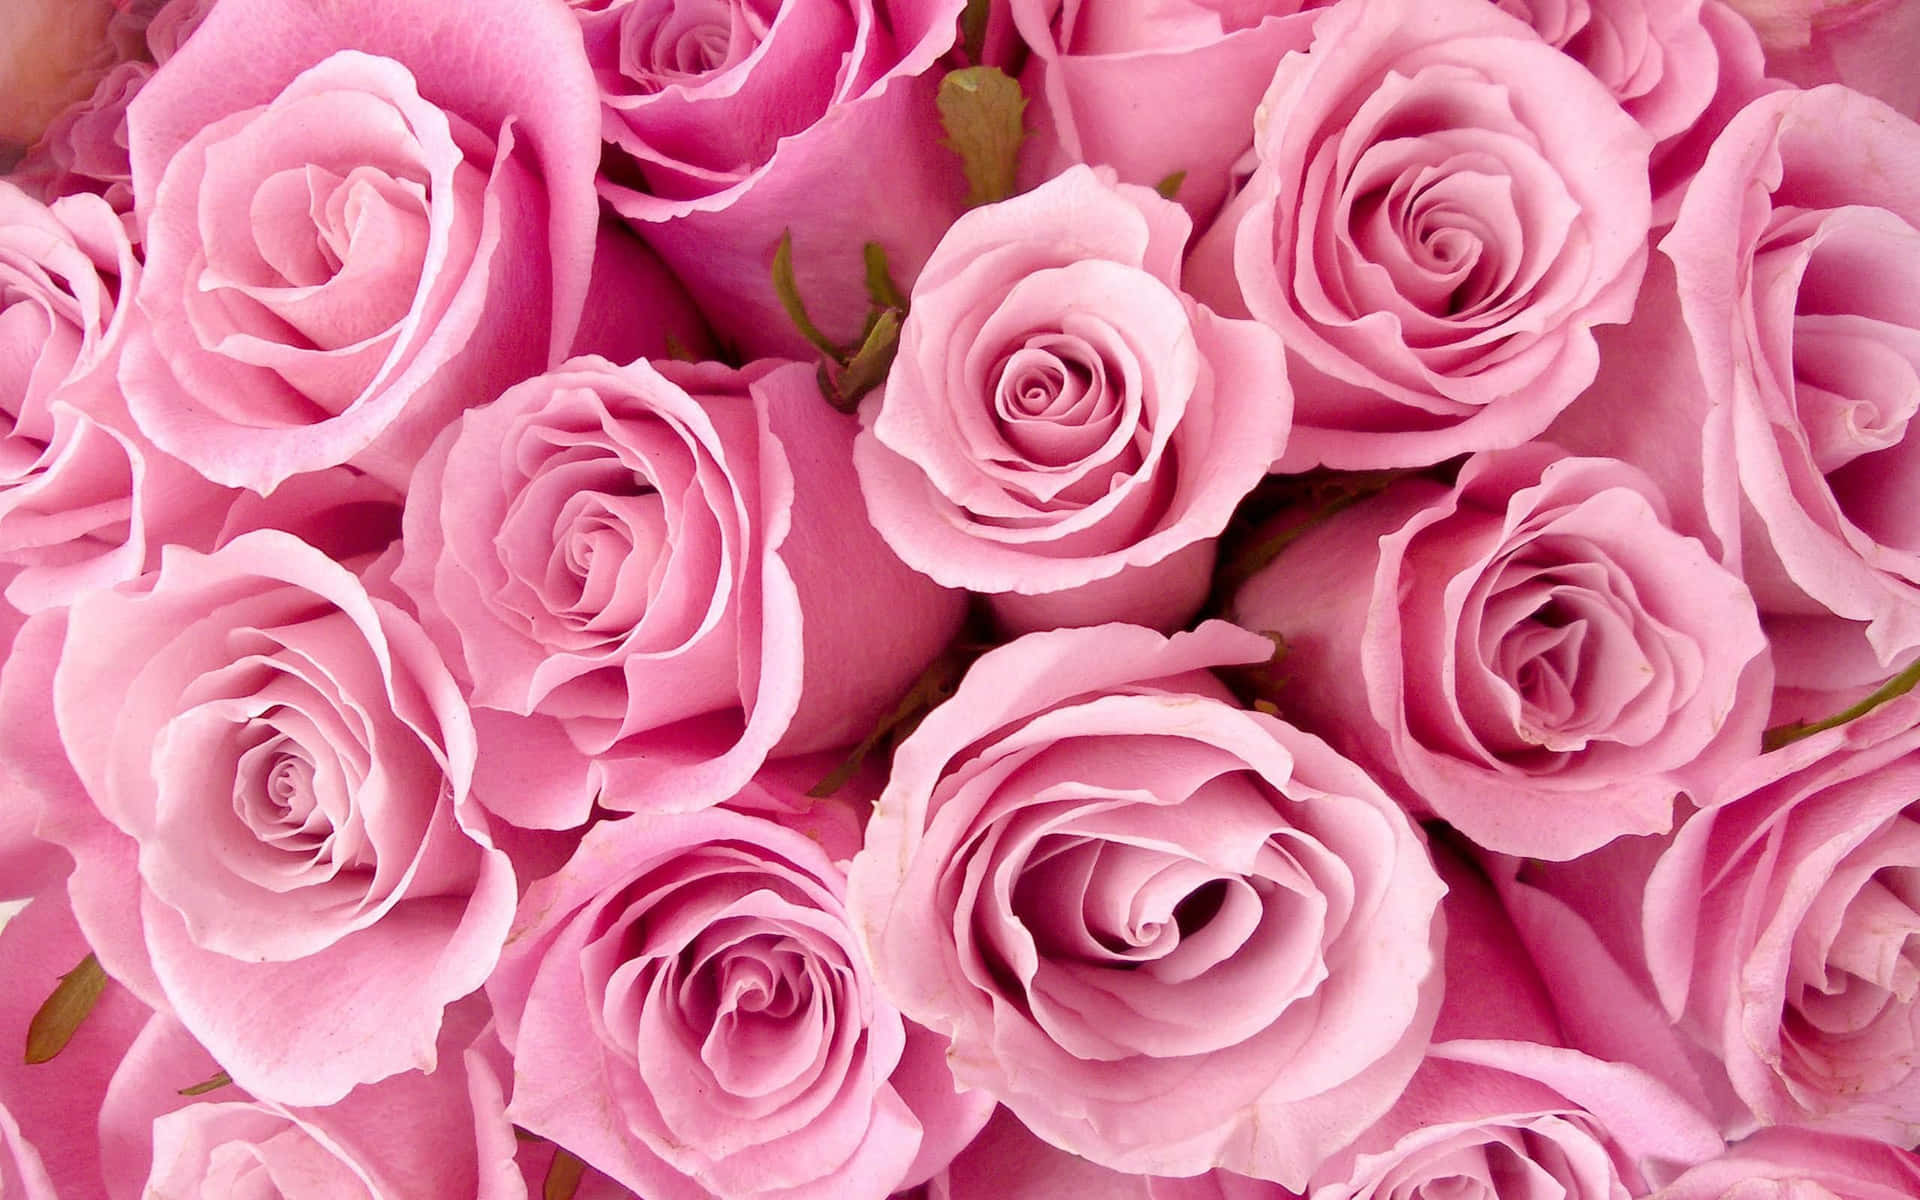 Besteshintergrundbild Mit Rosafarbenen Rosen